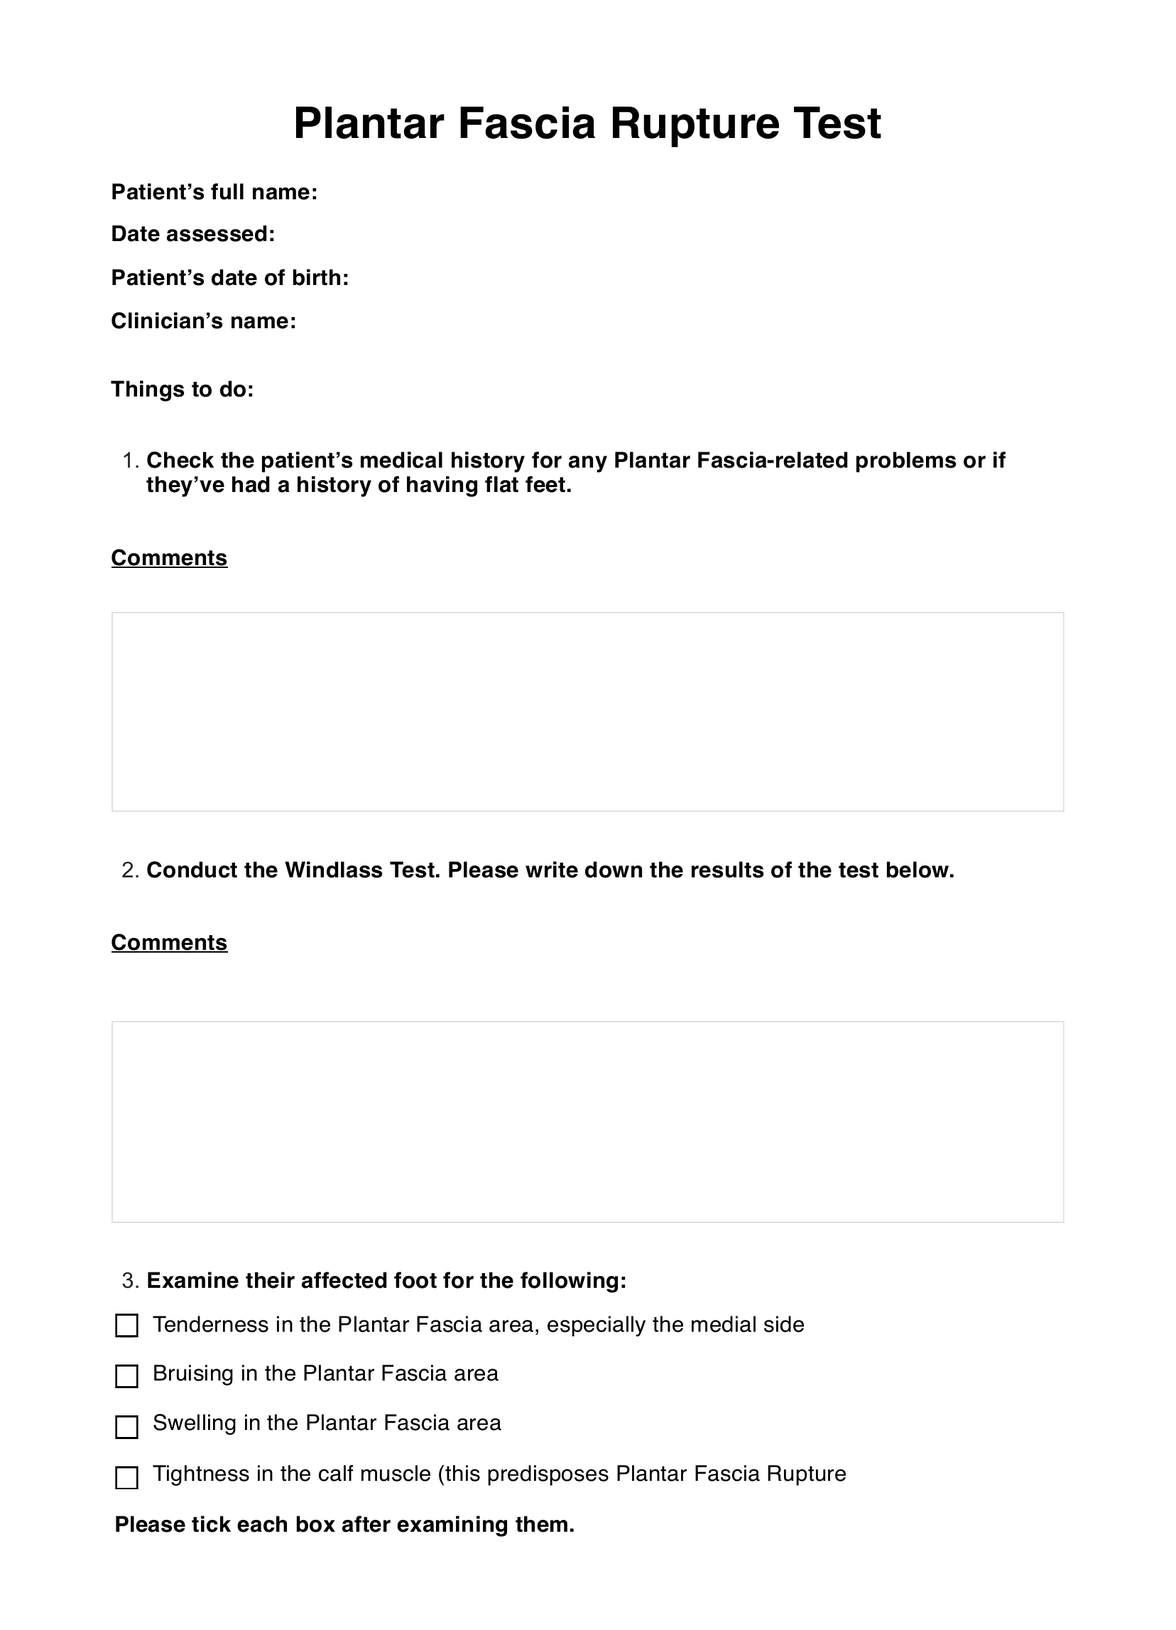 Plantar Fascia Rupture Test PDF Example